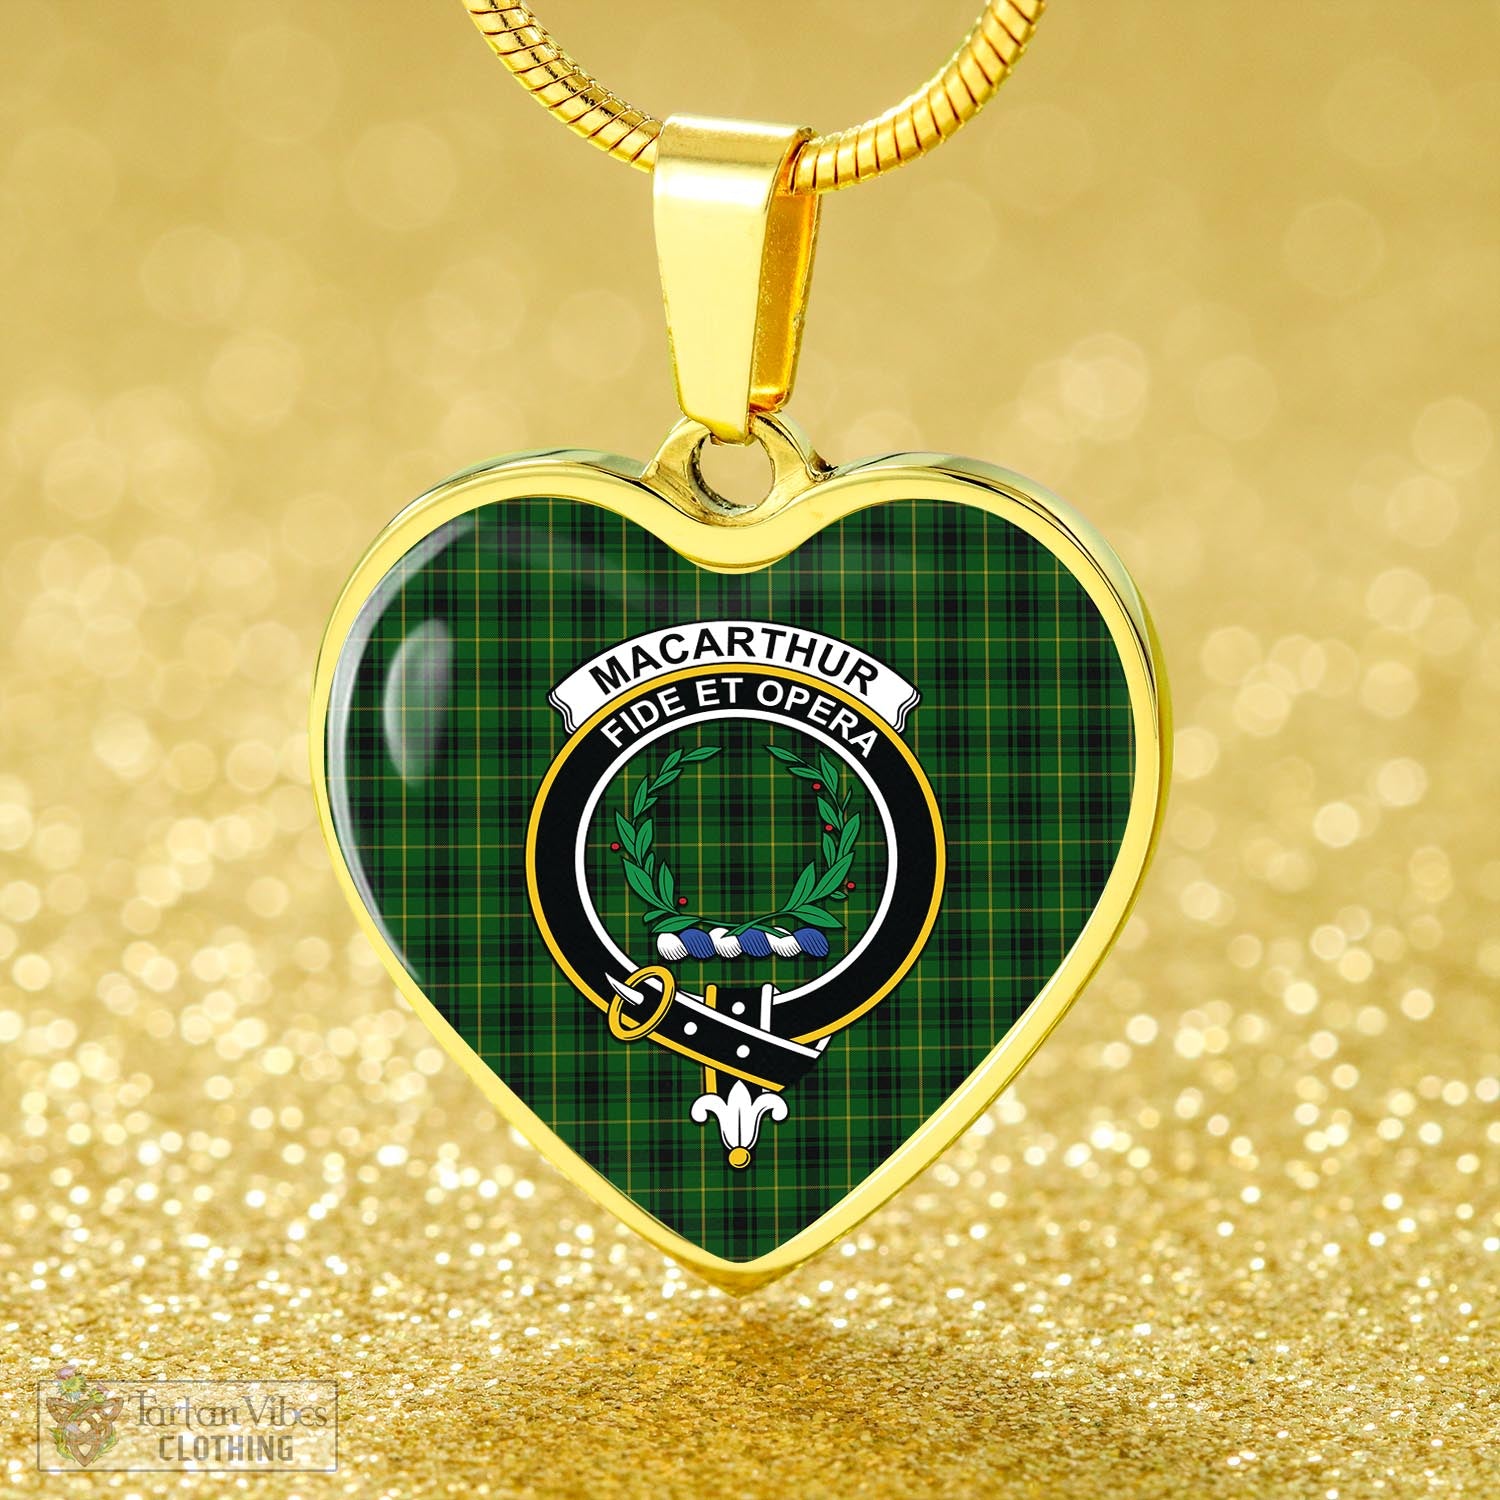 Tartan Vibes Clothing MacArthur Tartan Heart Necklace with Family Crest